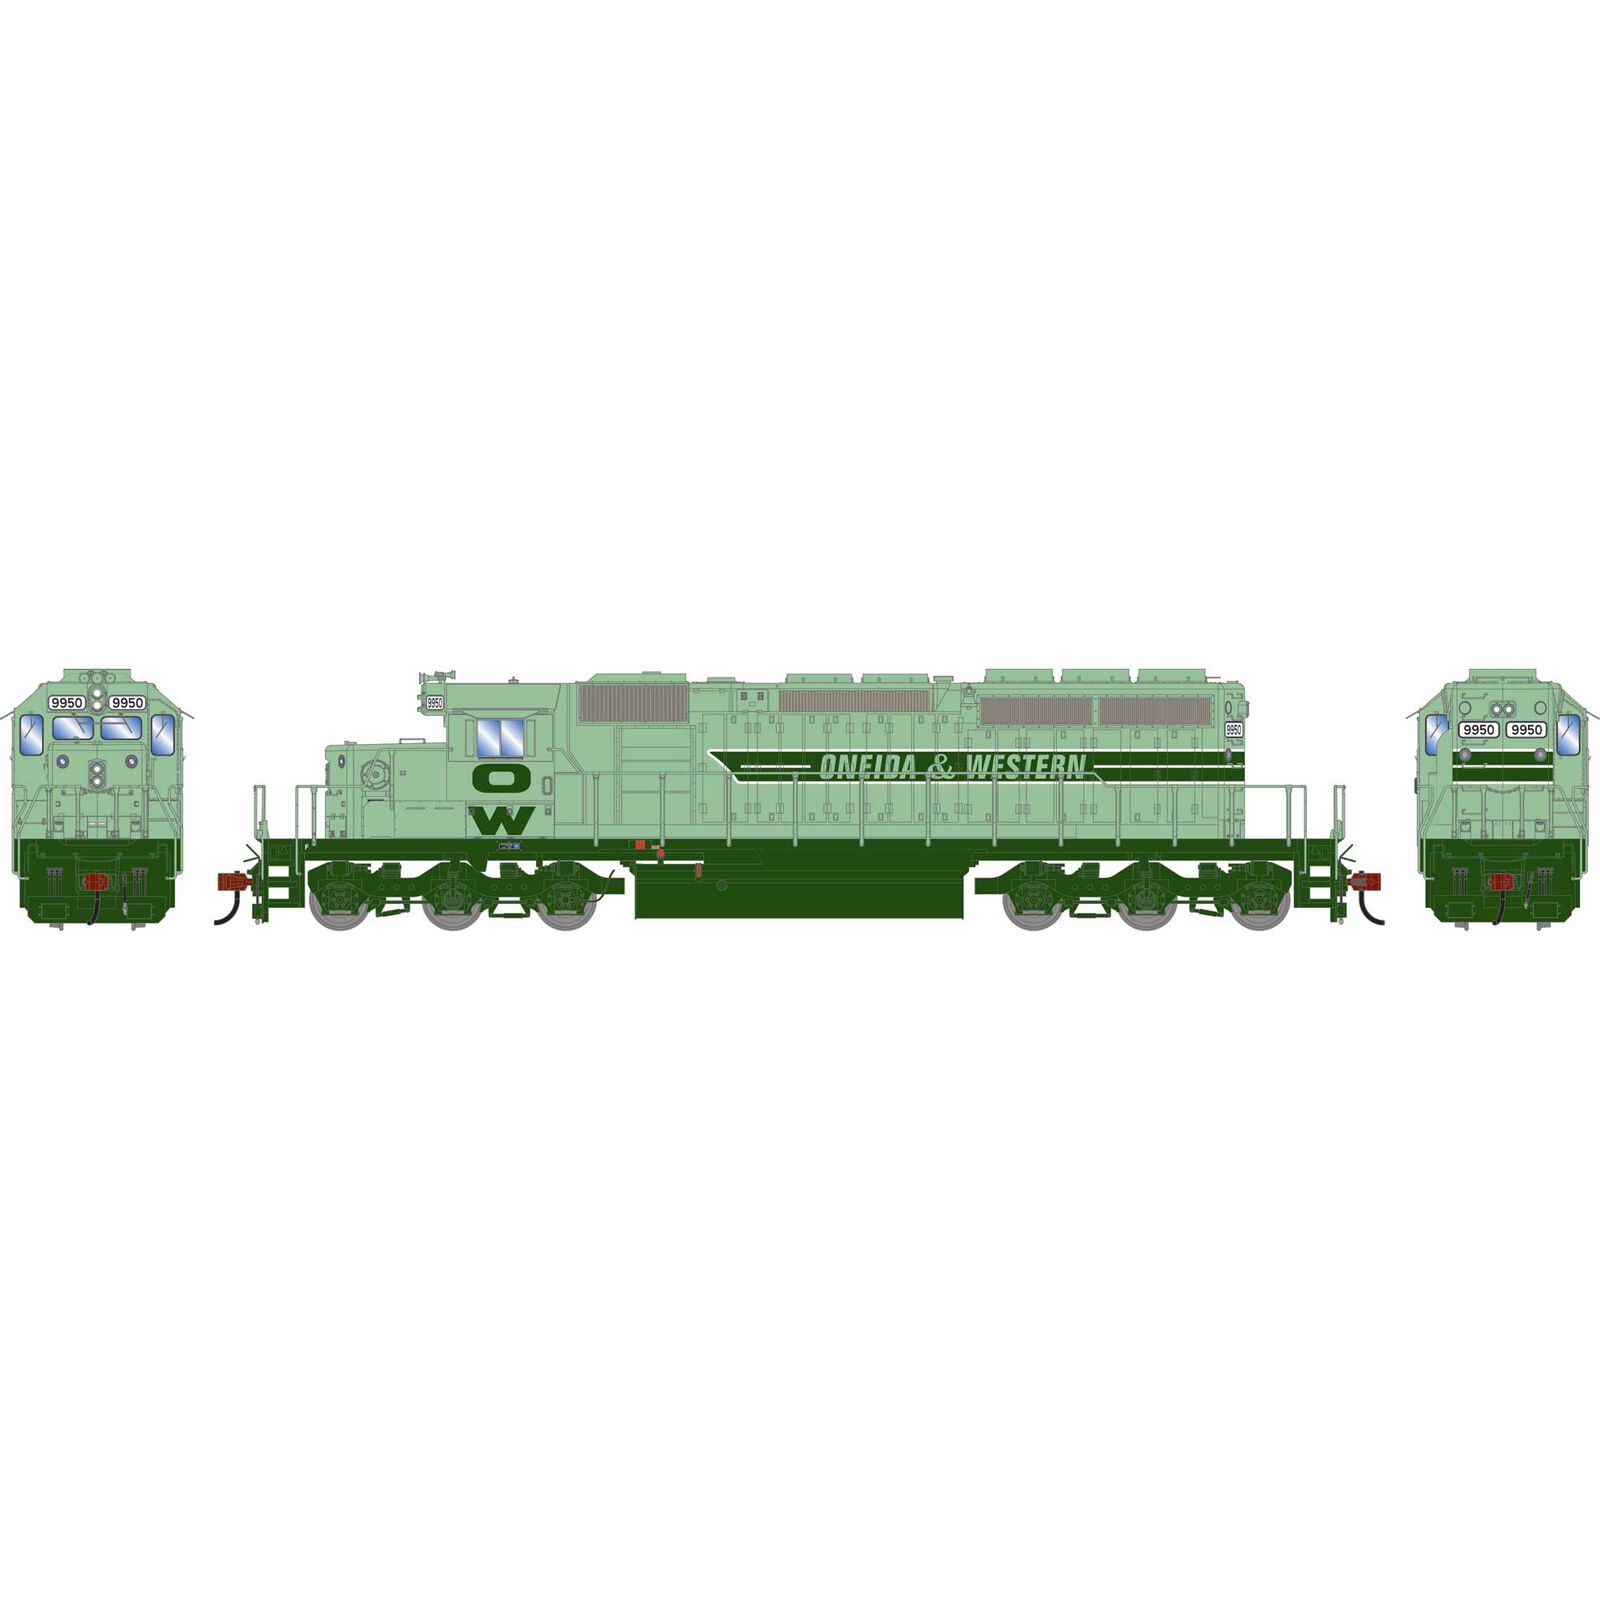 HO SD40-2 Locomotive with DCC & Sound, OWTX #9950